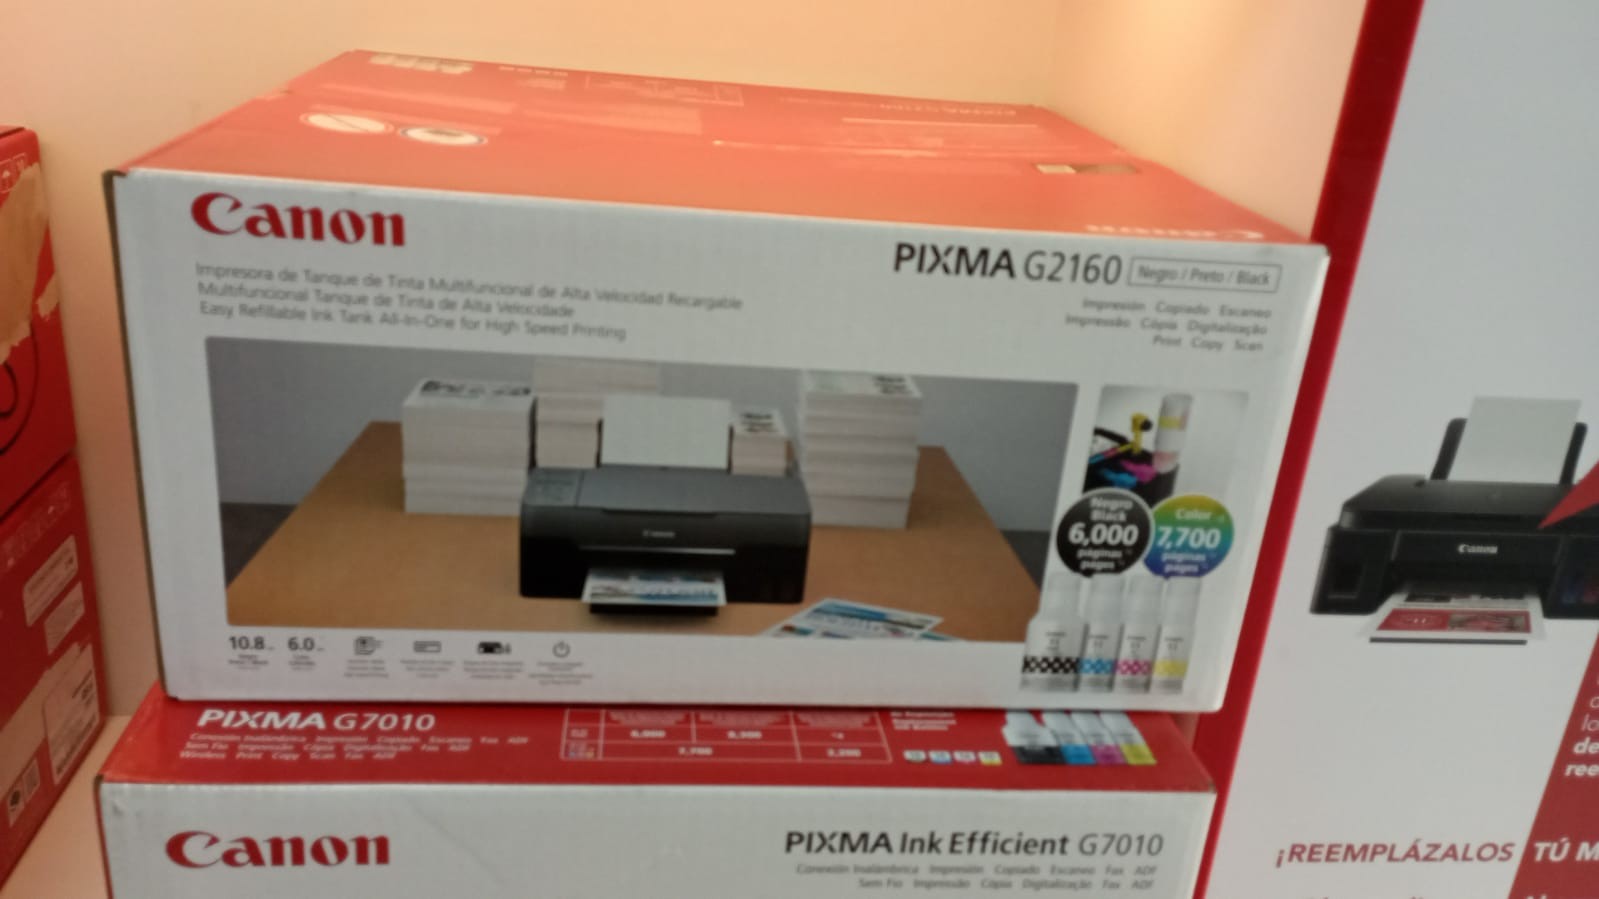 impresoras y scanners - IMPRESORA CANON PIXMA G2160 MULTIFUNCIONAL 